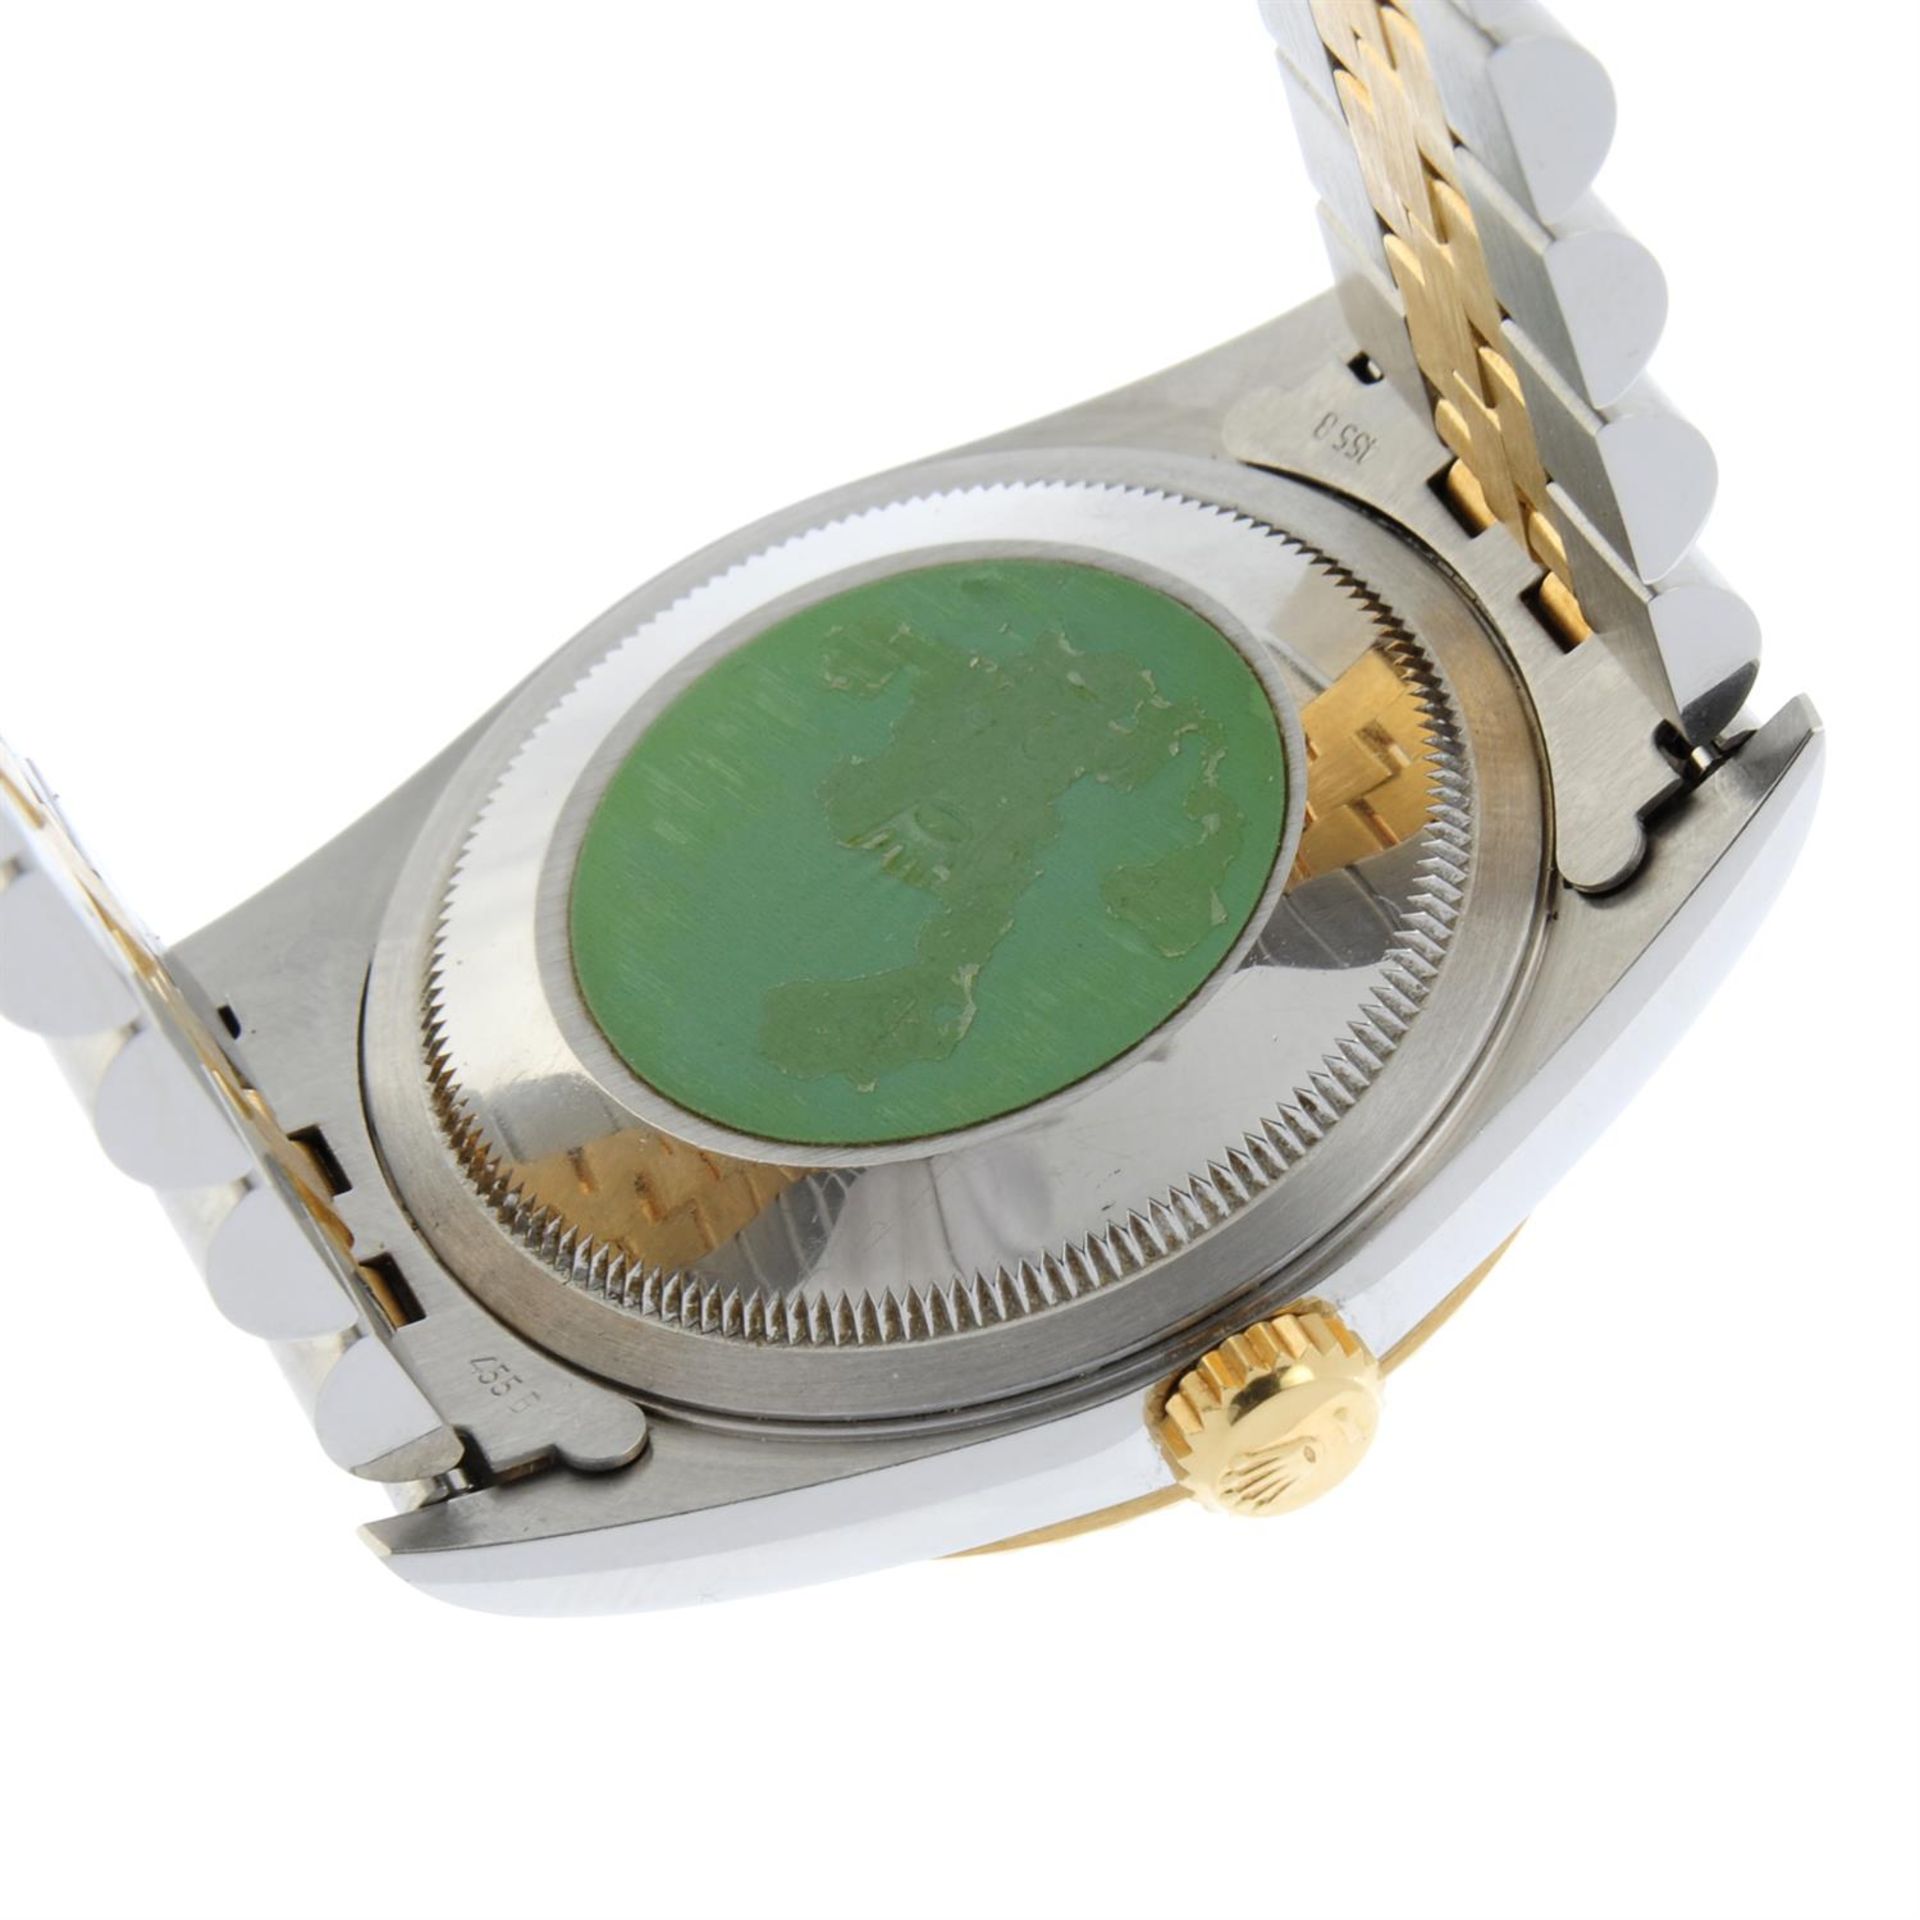 ROLEX - a bi-metal Oyster Perpetual Datejust bracelet watch, 36mm. - Image 5 of 6